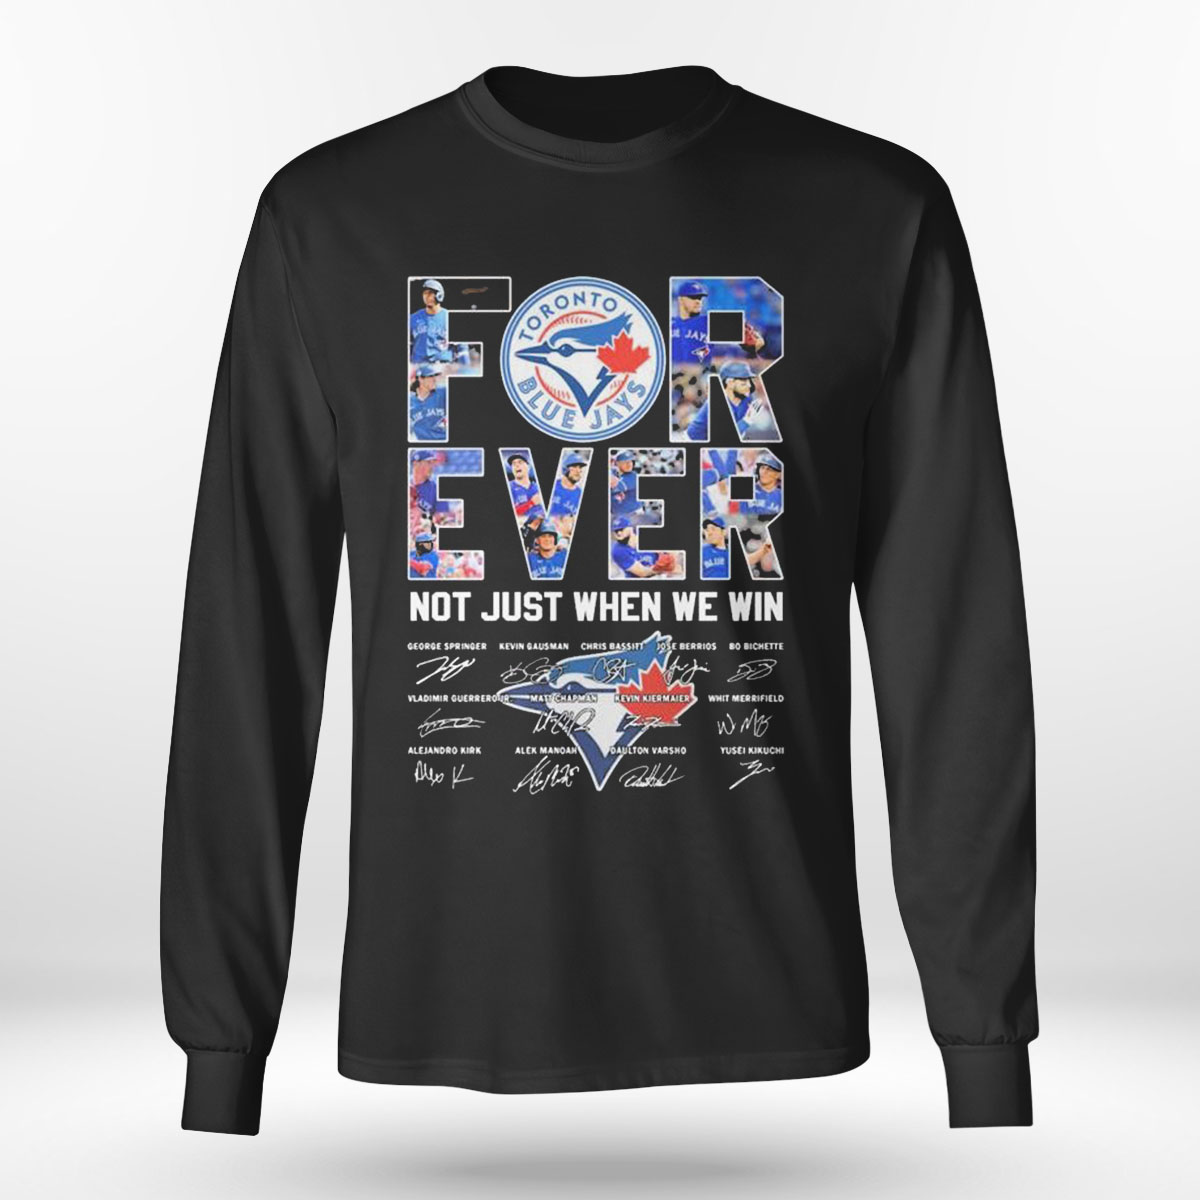 Toronto Blue Jays Yes I Am Old But I Saw Back 2 Back World Series Champions 1992 1993 Signatures T-shirt